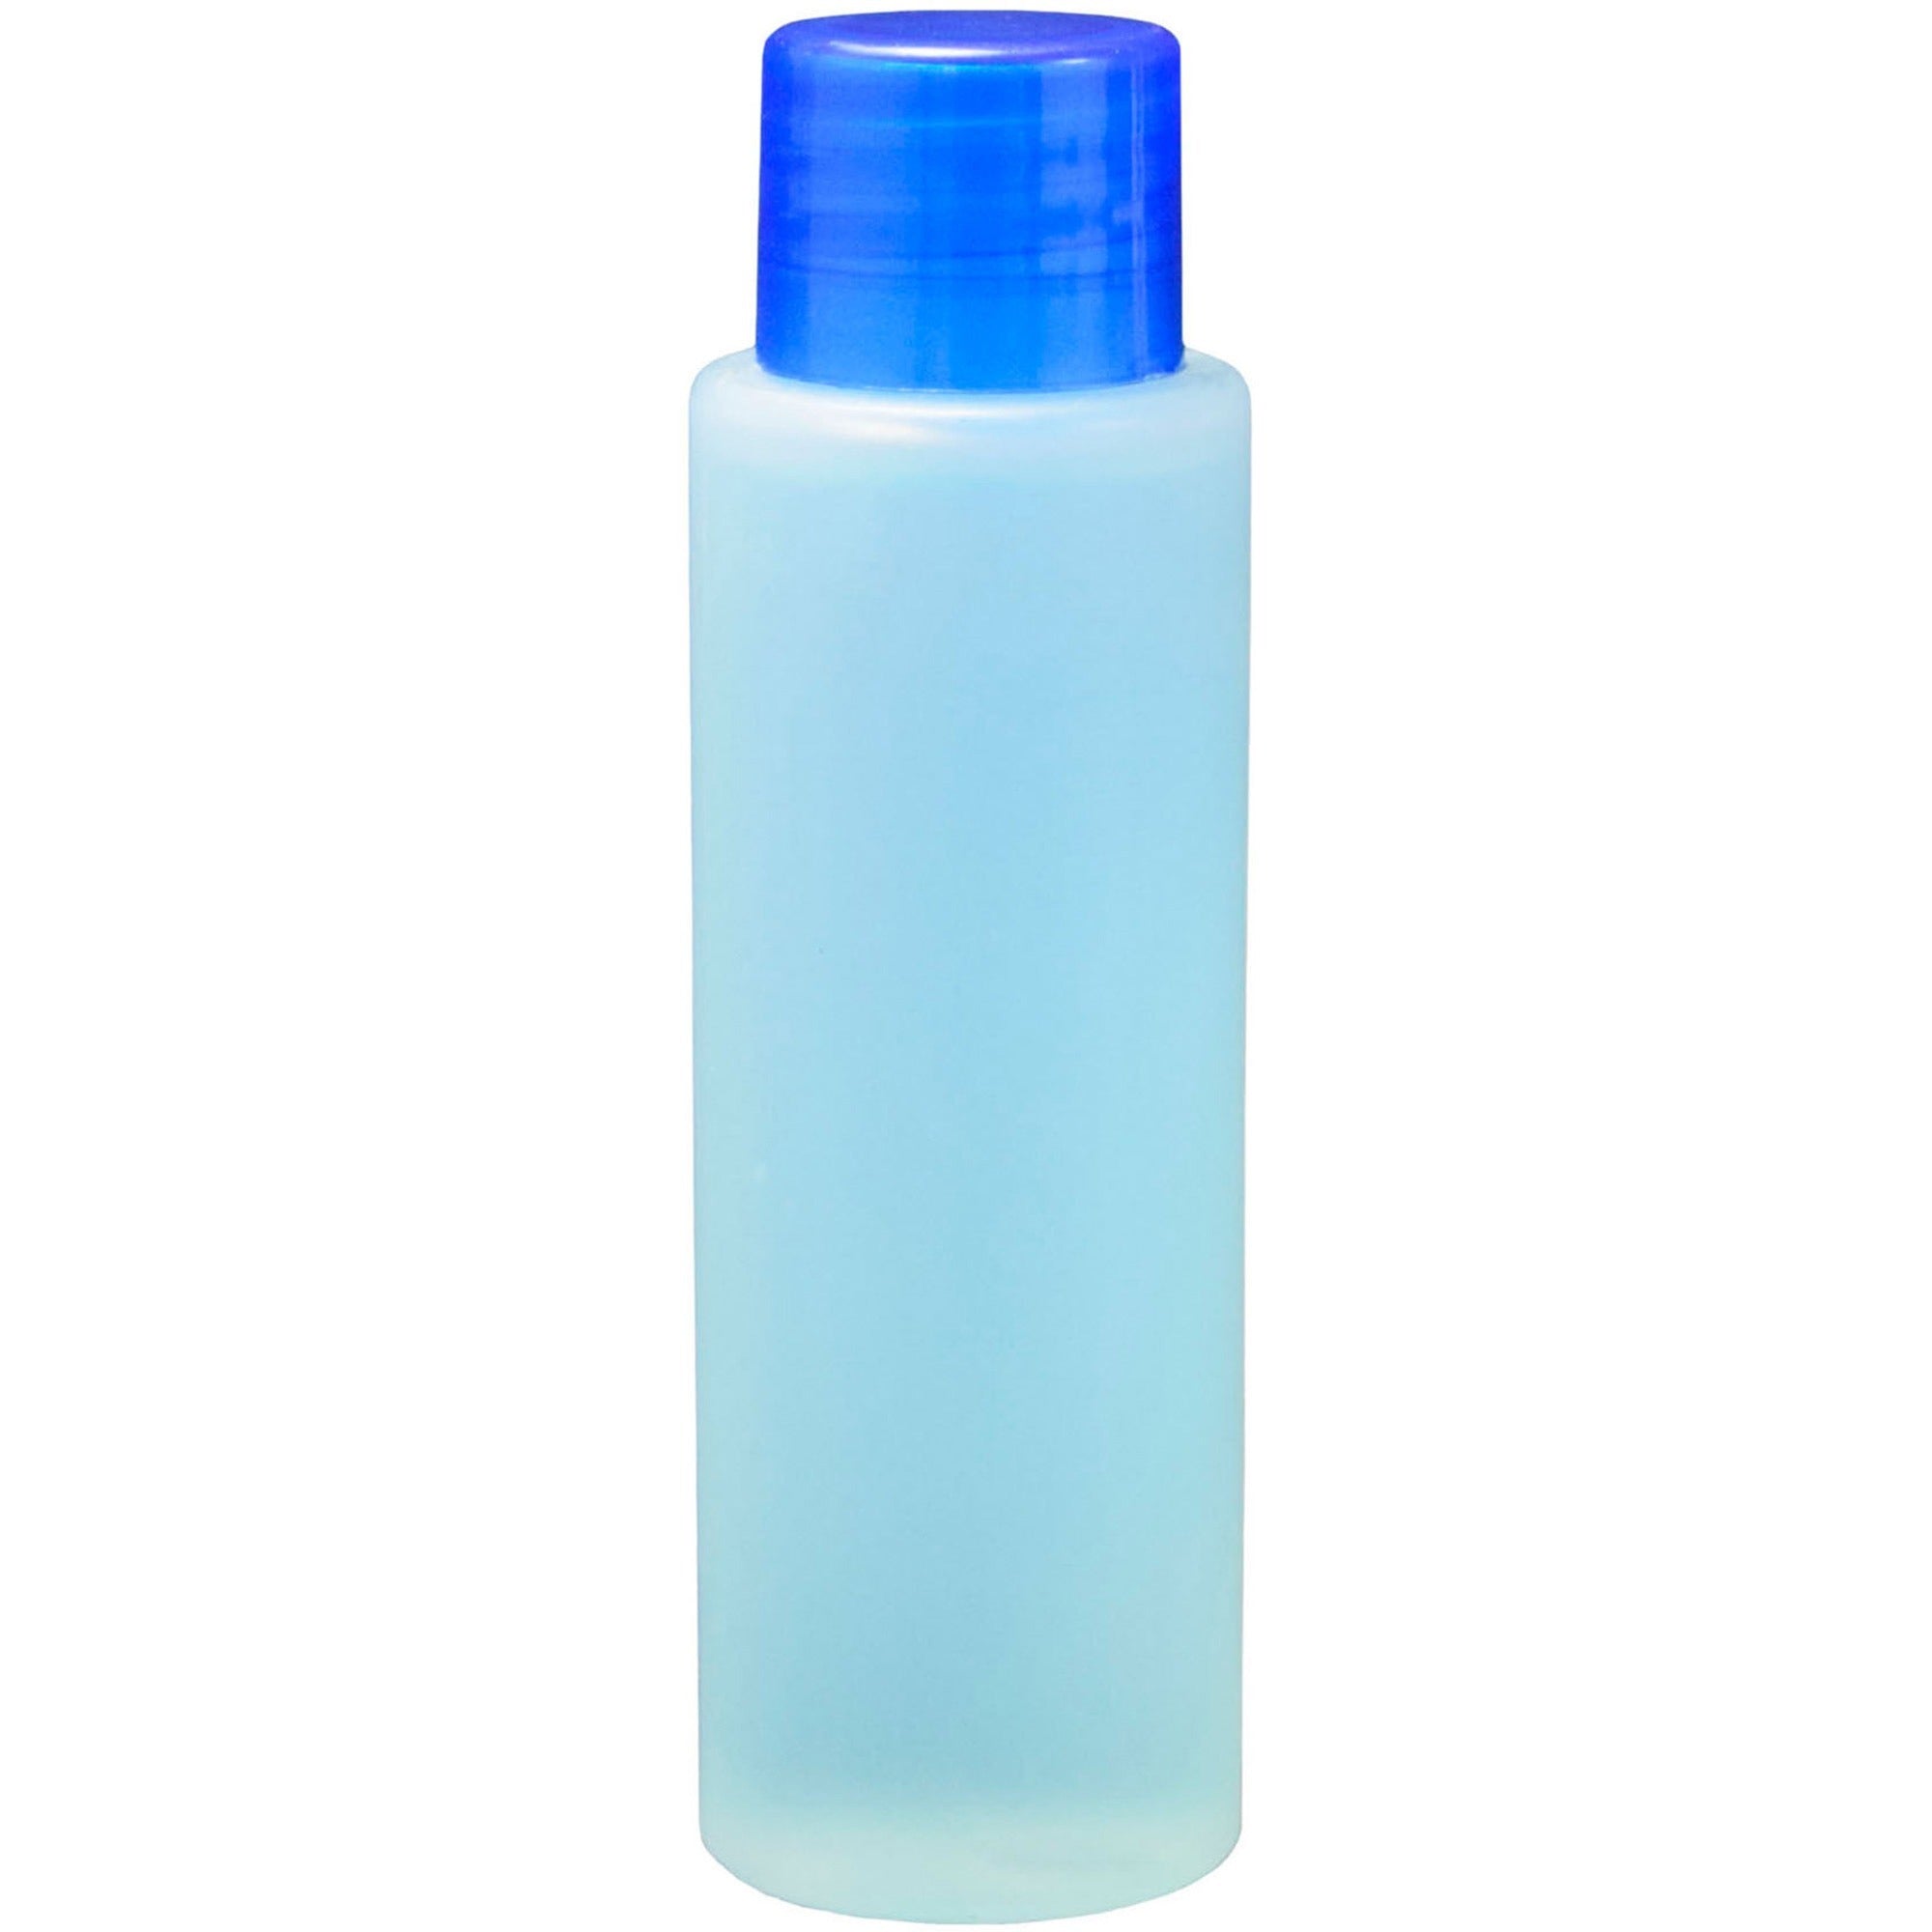 rdi-shampoo-1-fl-oz-30-ml-bottle-dispenser-hotel-white-288-carton_cfpshoasbtl1709 - 2